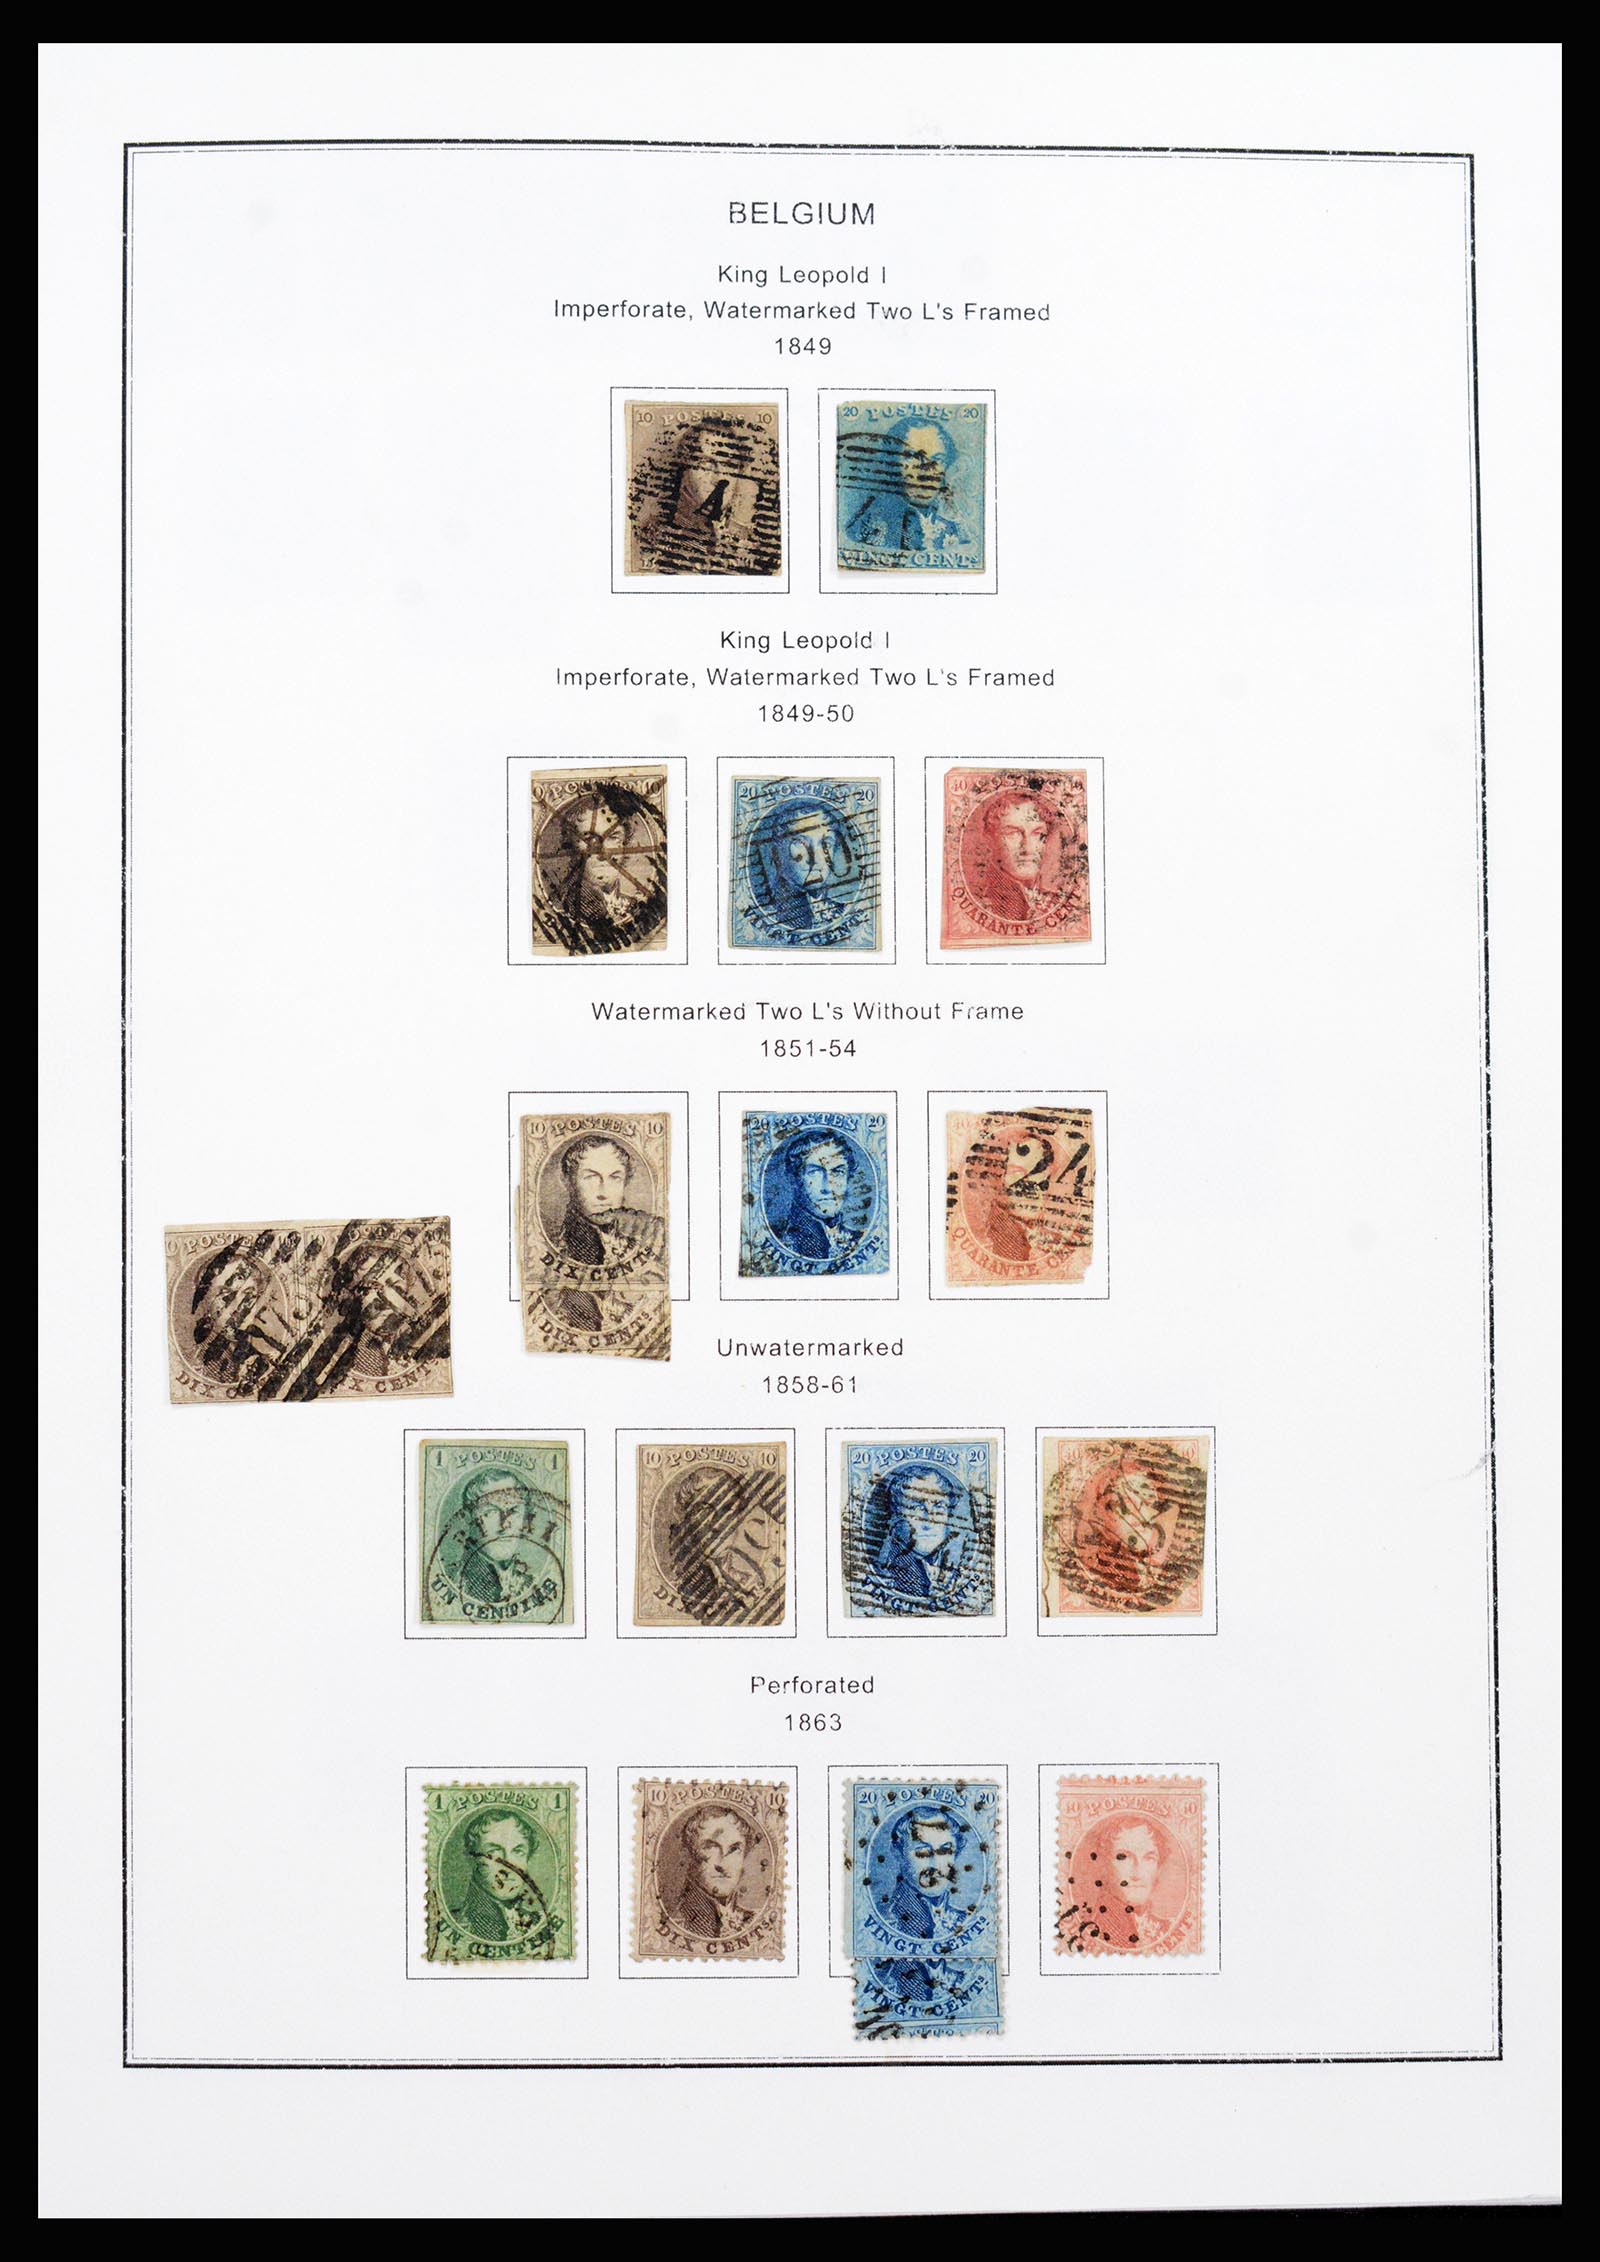 37240 001 - Stamp collection 37240 Belgium 1849-1996.